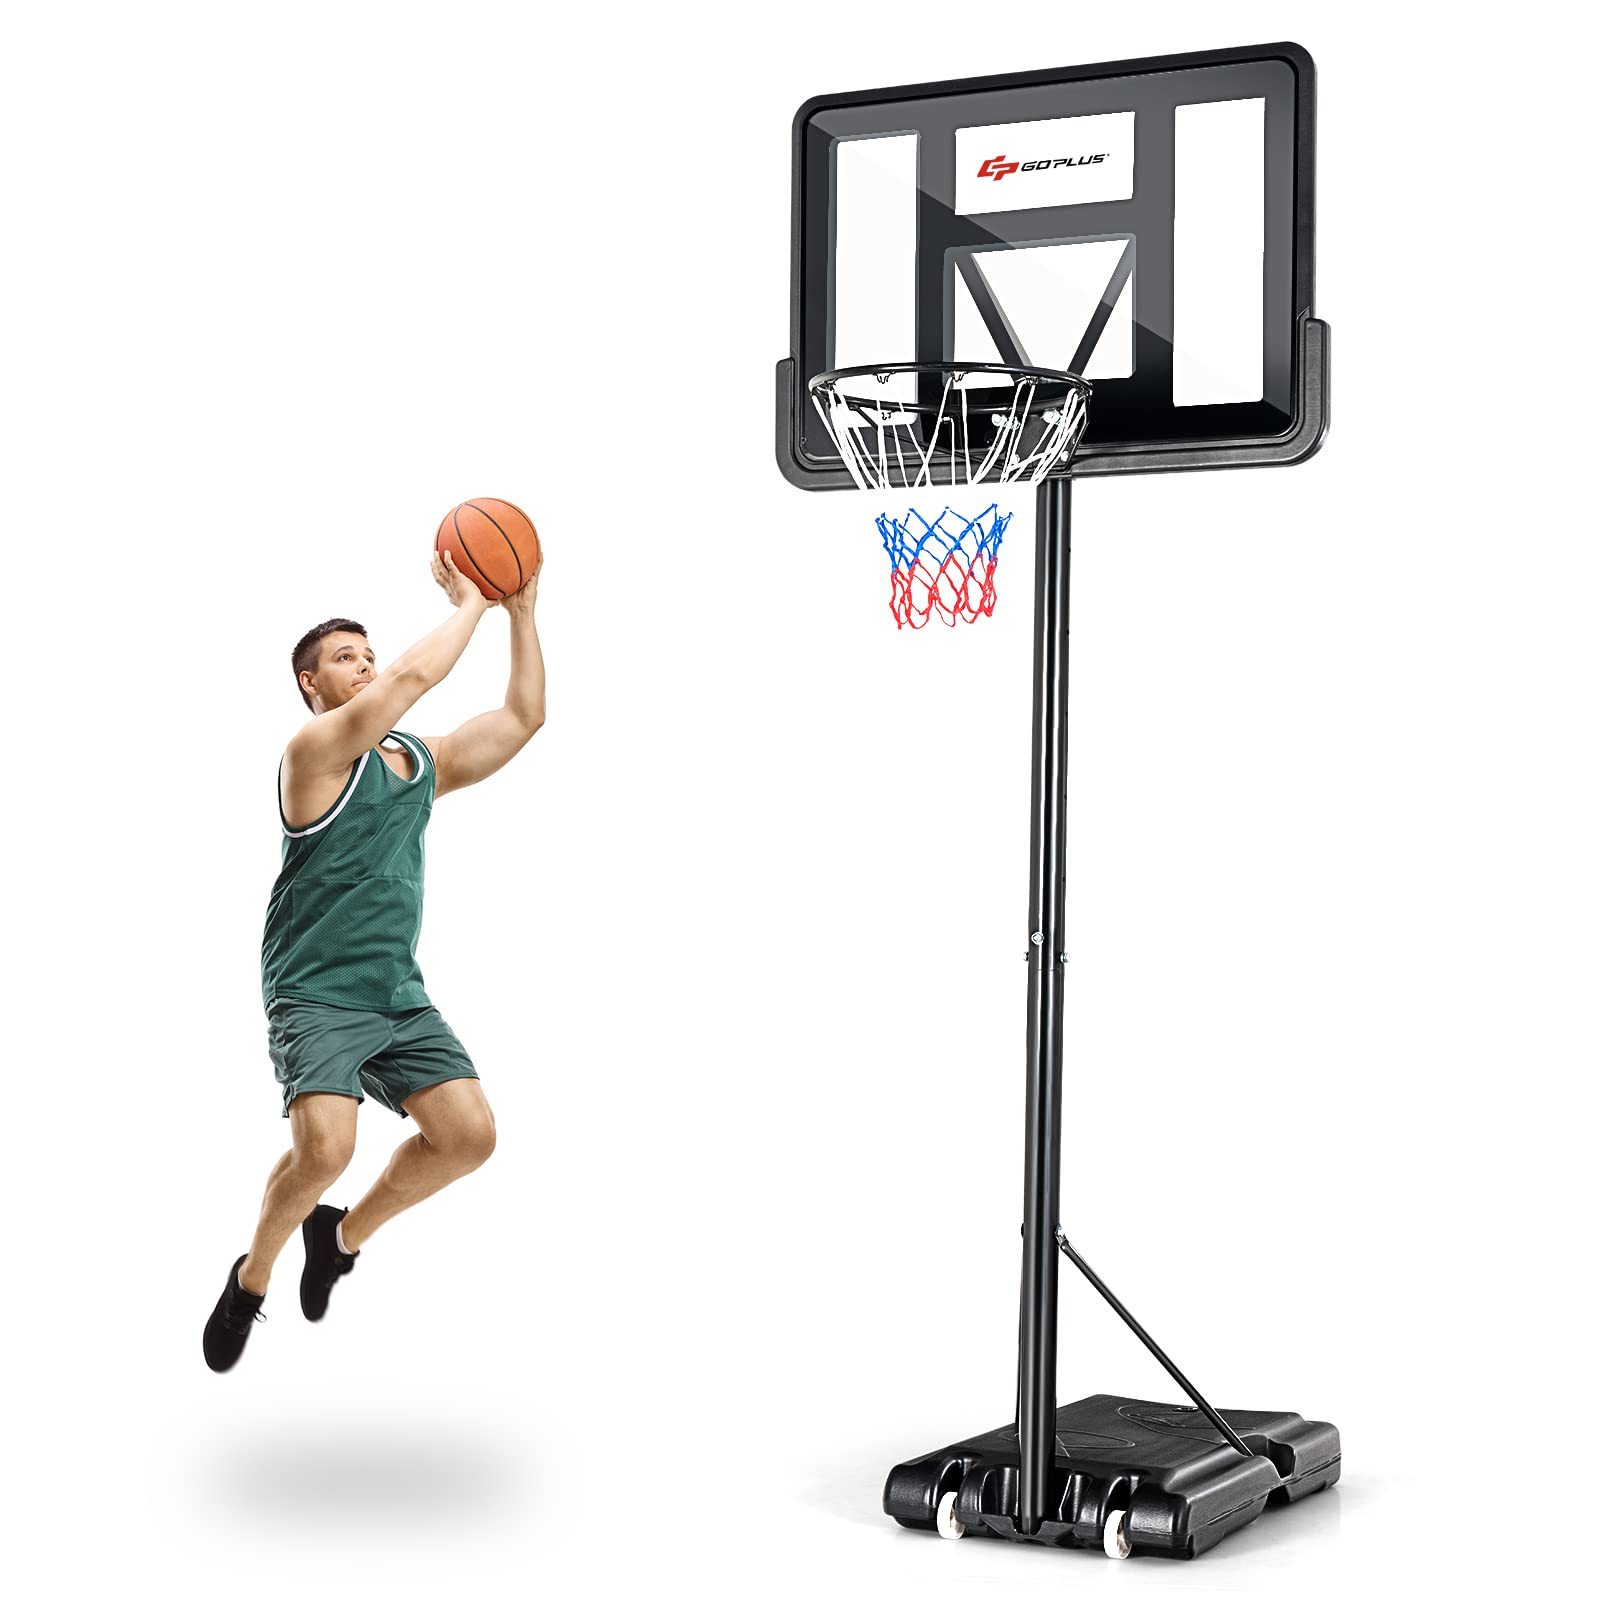 Goplus Portable Basketball Hoop Outdoor, 4.5FT-10FT Height Adjustable Basketball Goal System